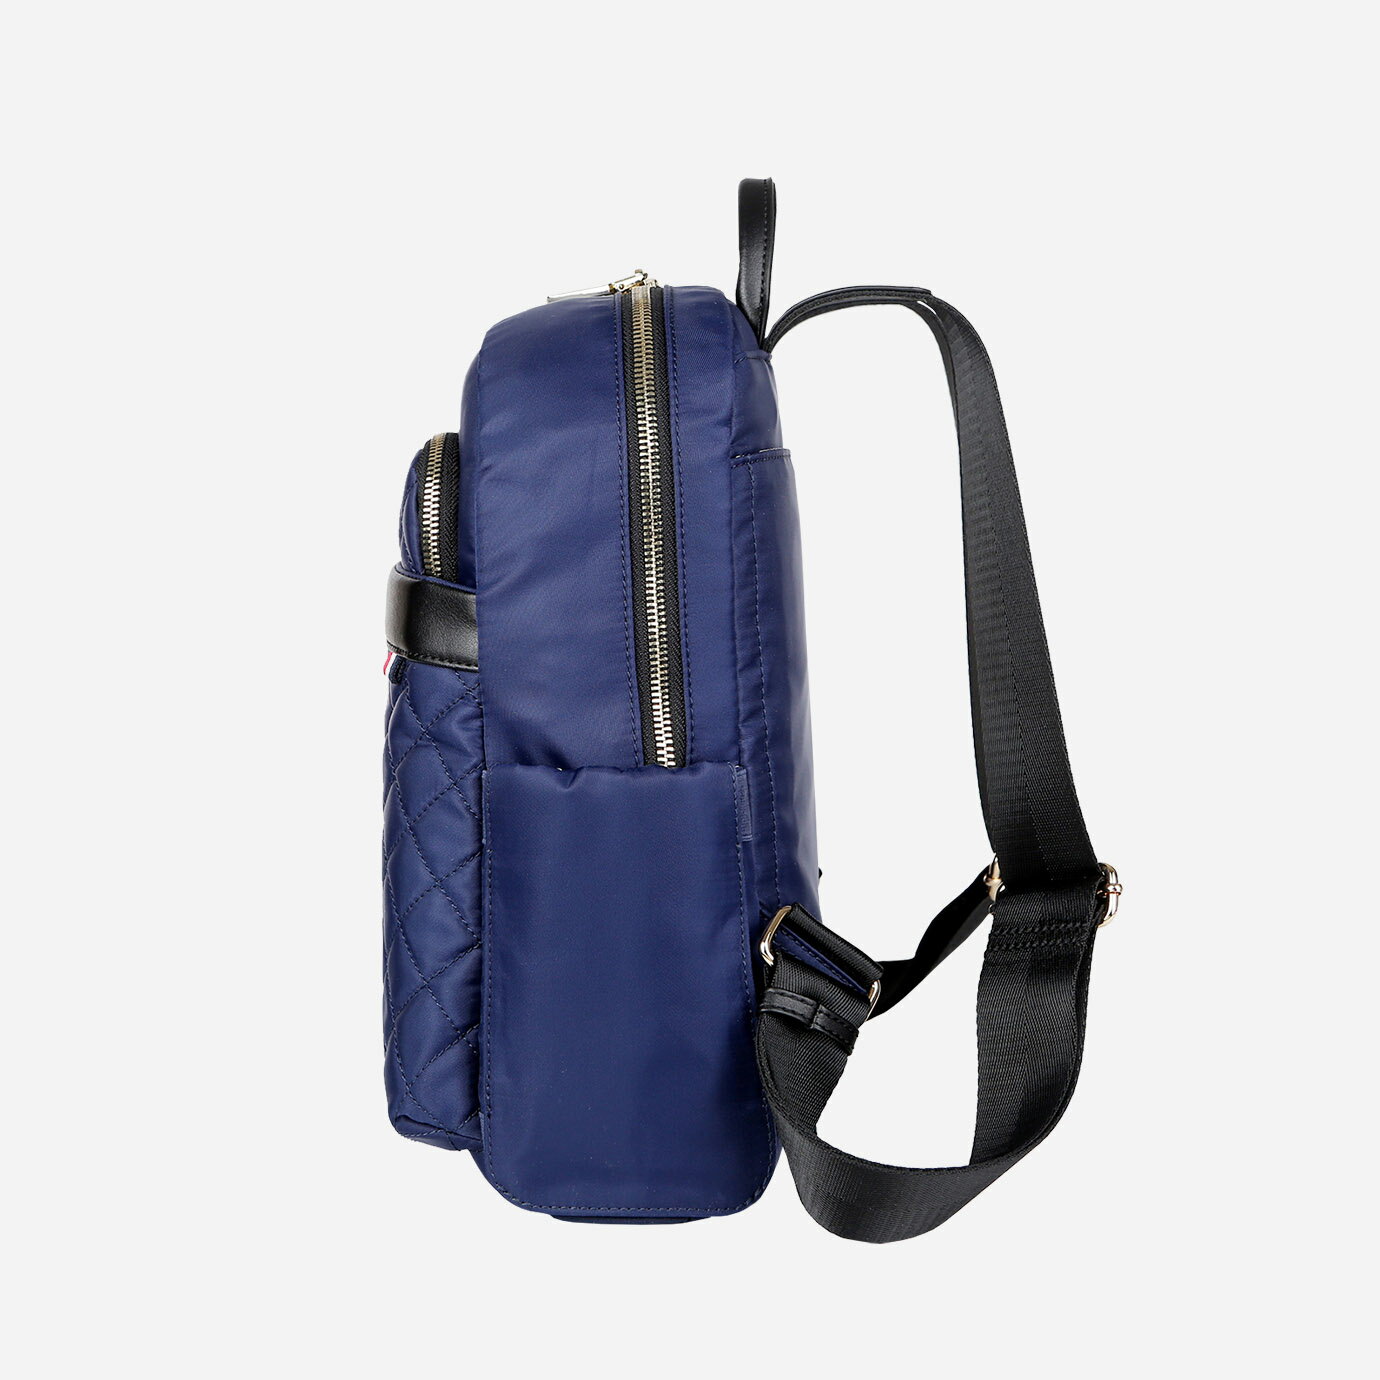 Nordace Ellie Mini- 後背包 充電雙肩包 雙肩包 筆電包 電腦包 旅行包 休閒包 防水背包 7色可選-藍色 4